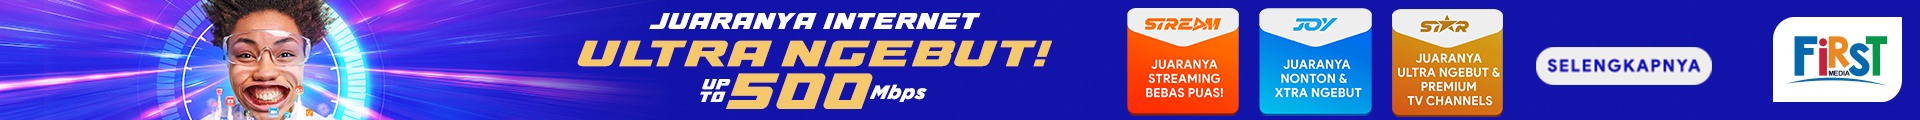 https://www.firstmedia.com/get/global/paket-unlimited-internet-tv-hd